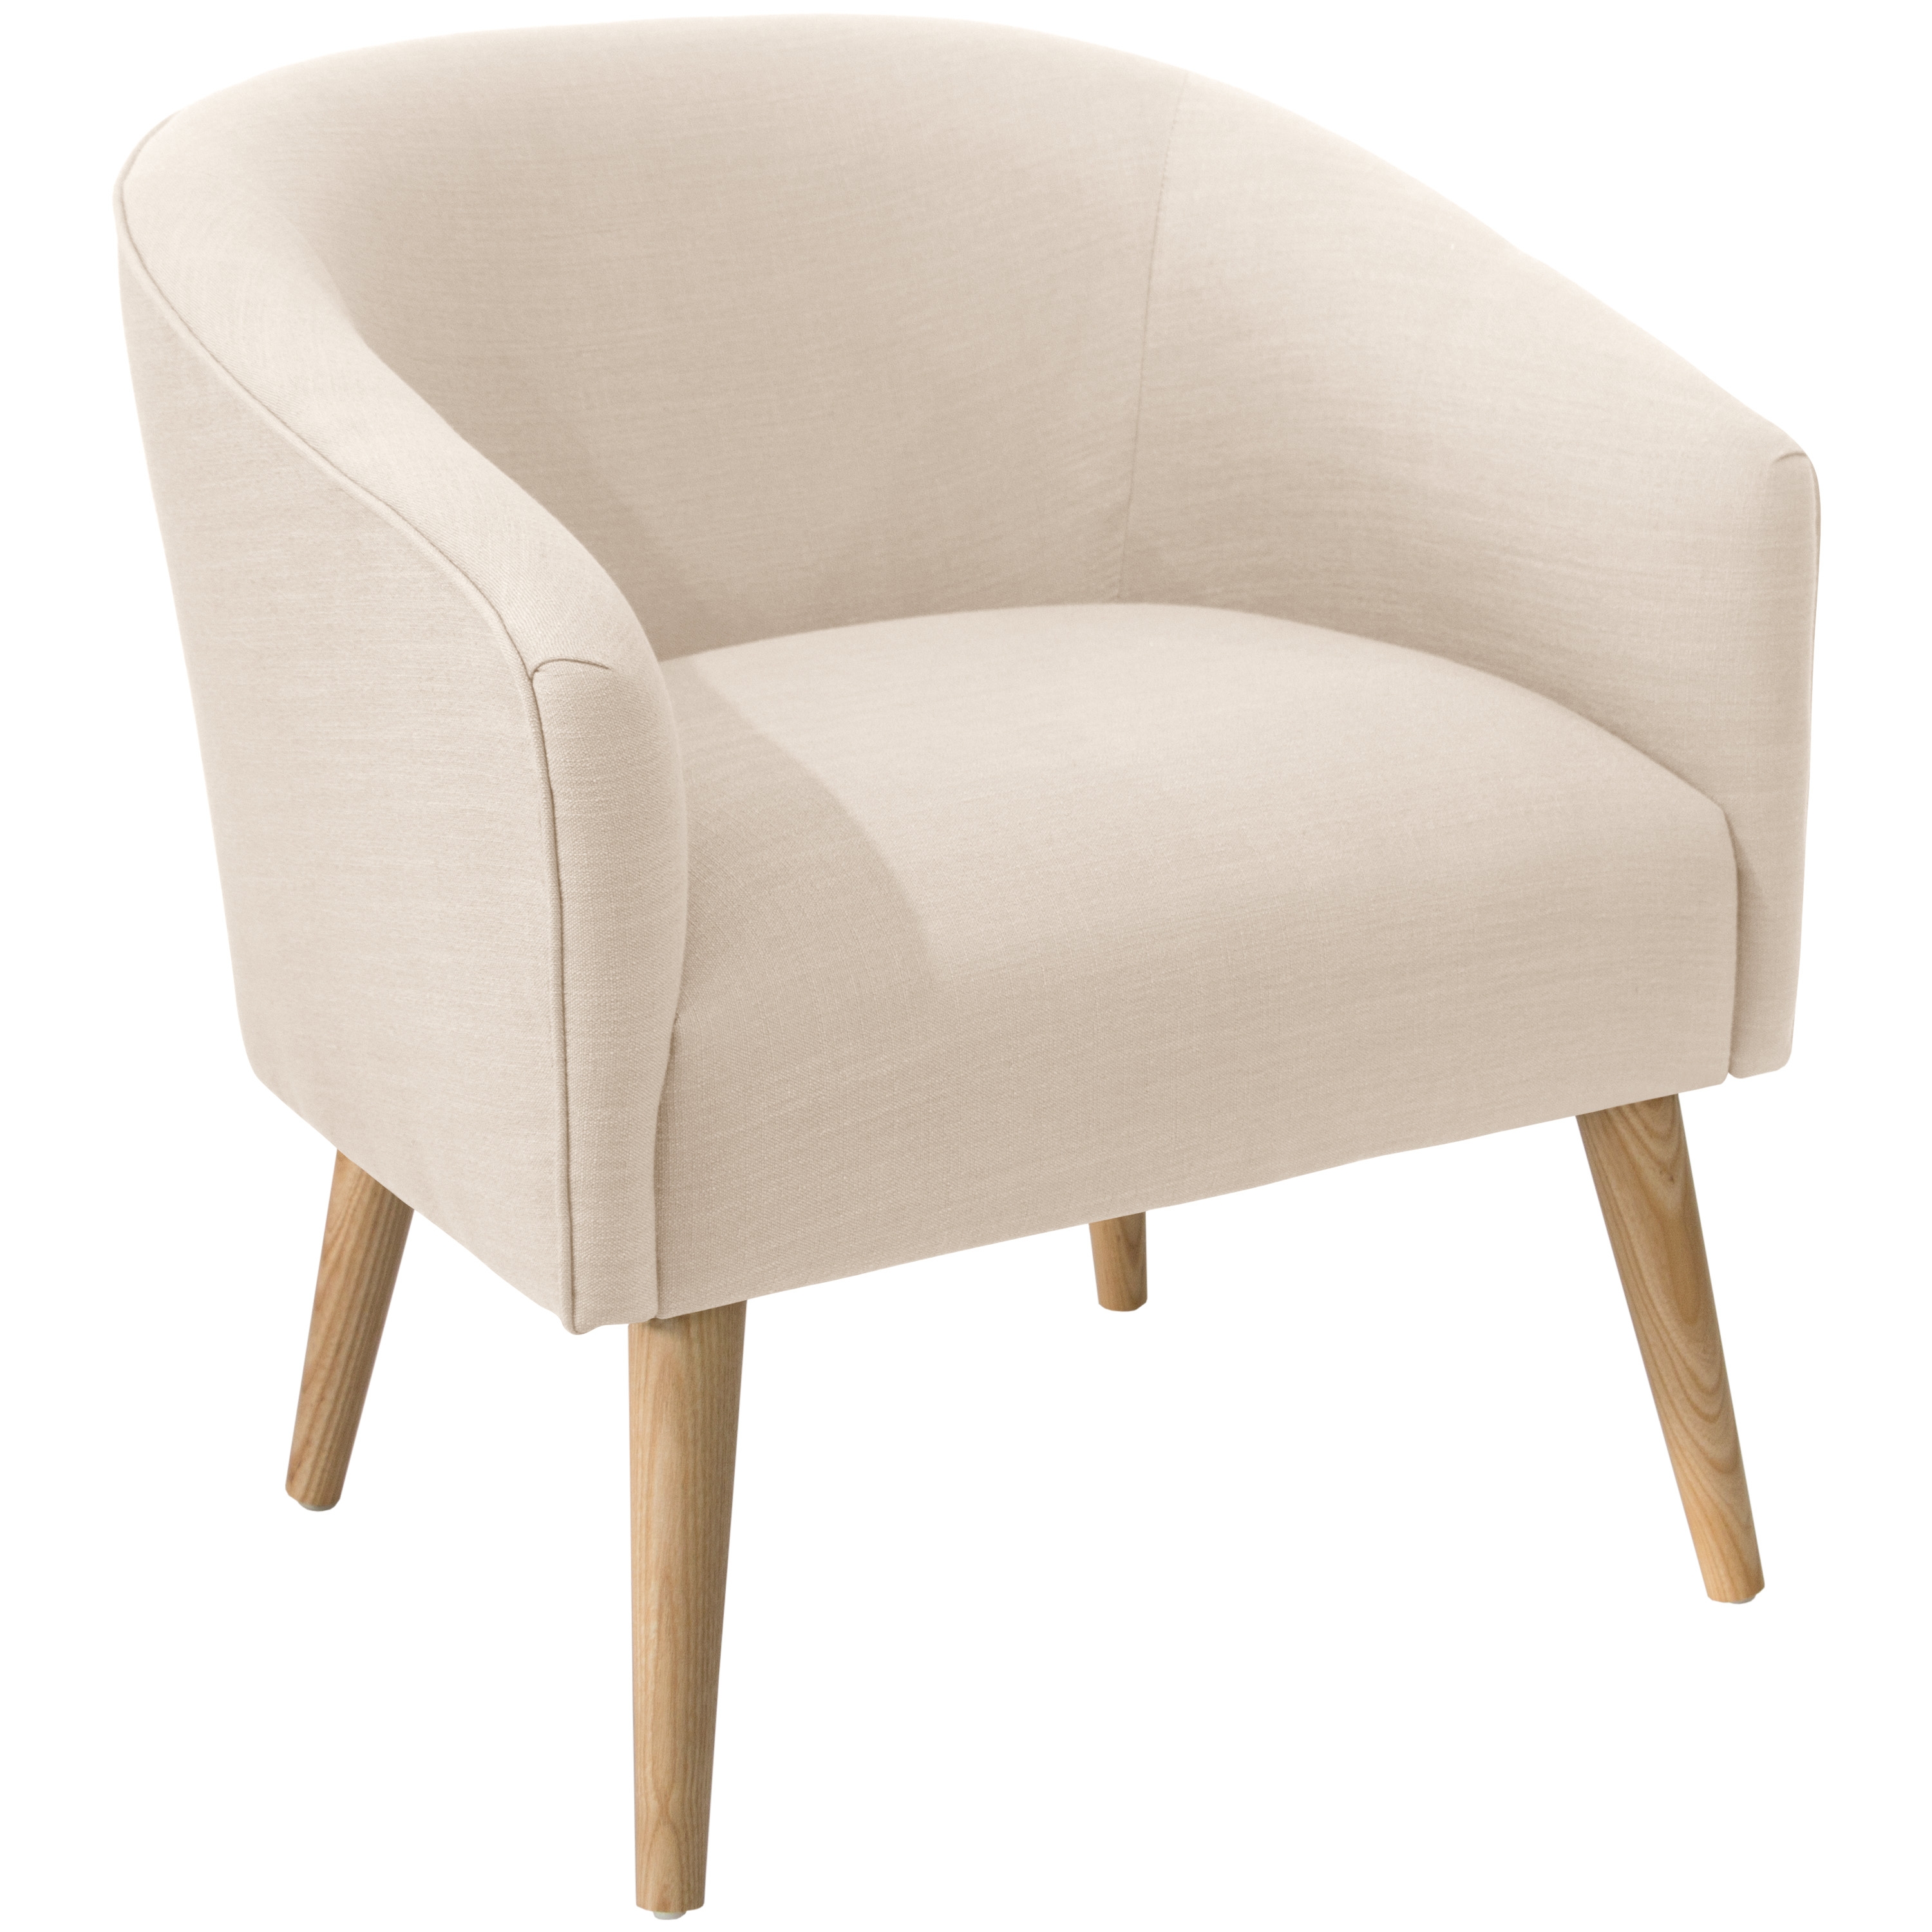 Dexter Chair, Talc - Image 0